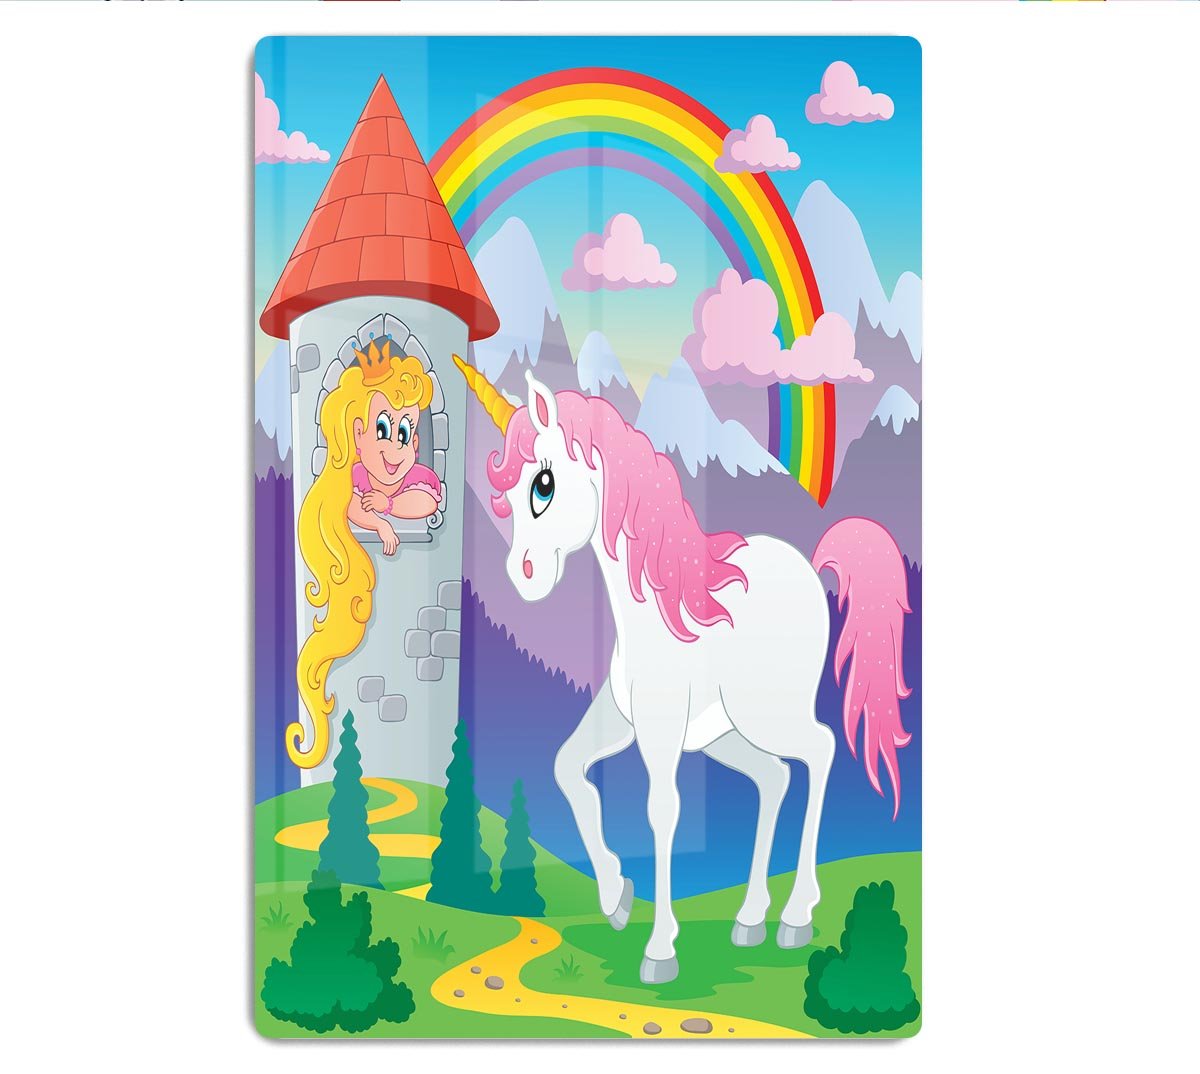 Fairy tale unicorn HD Metal Print